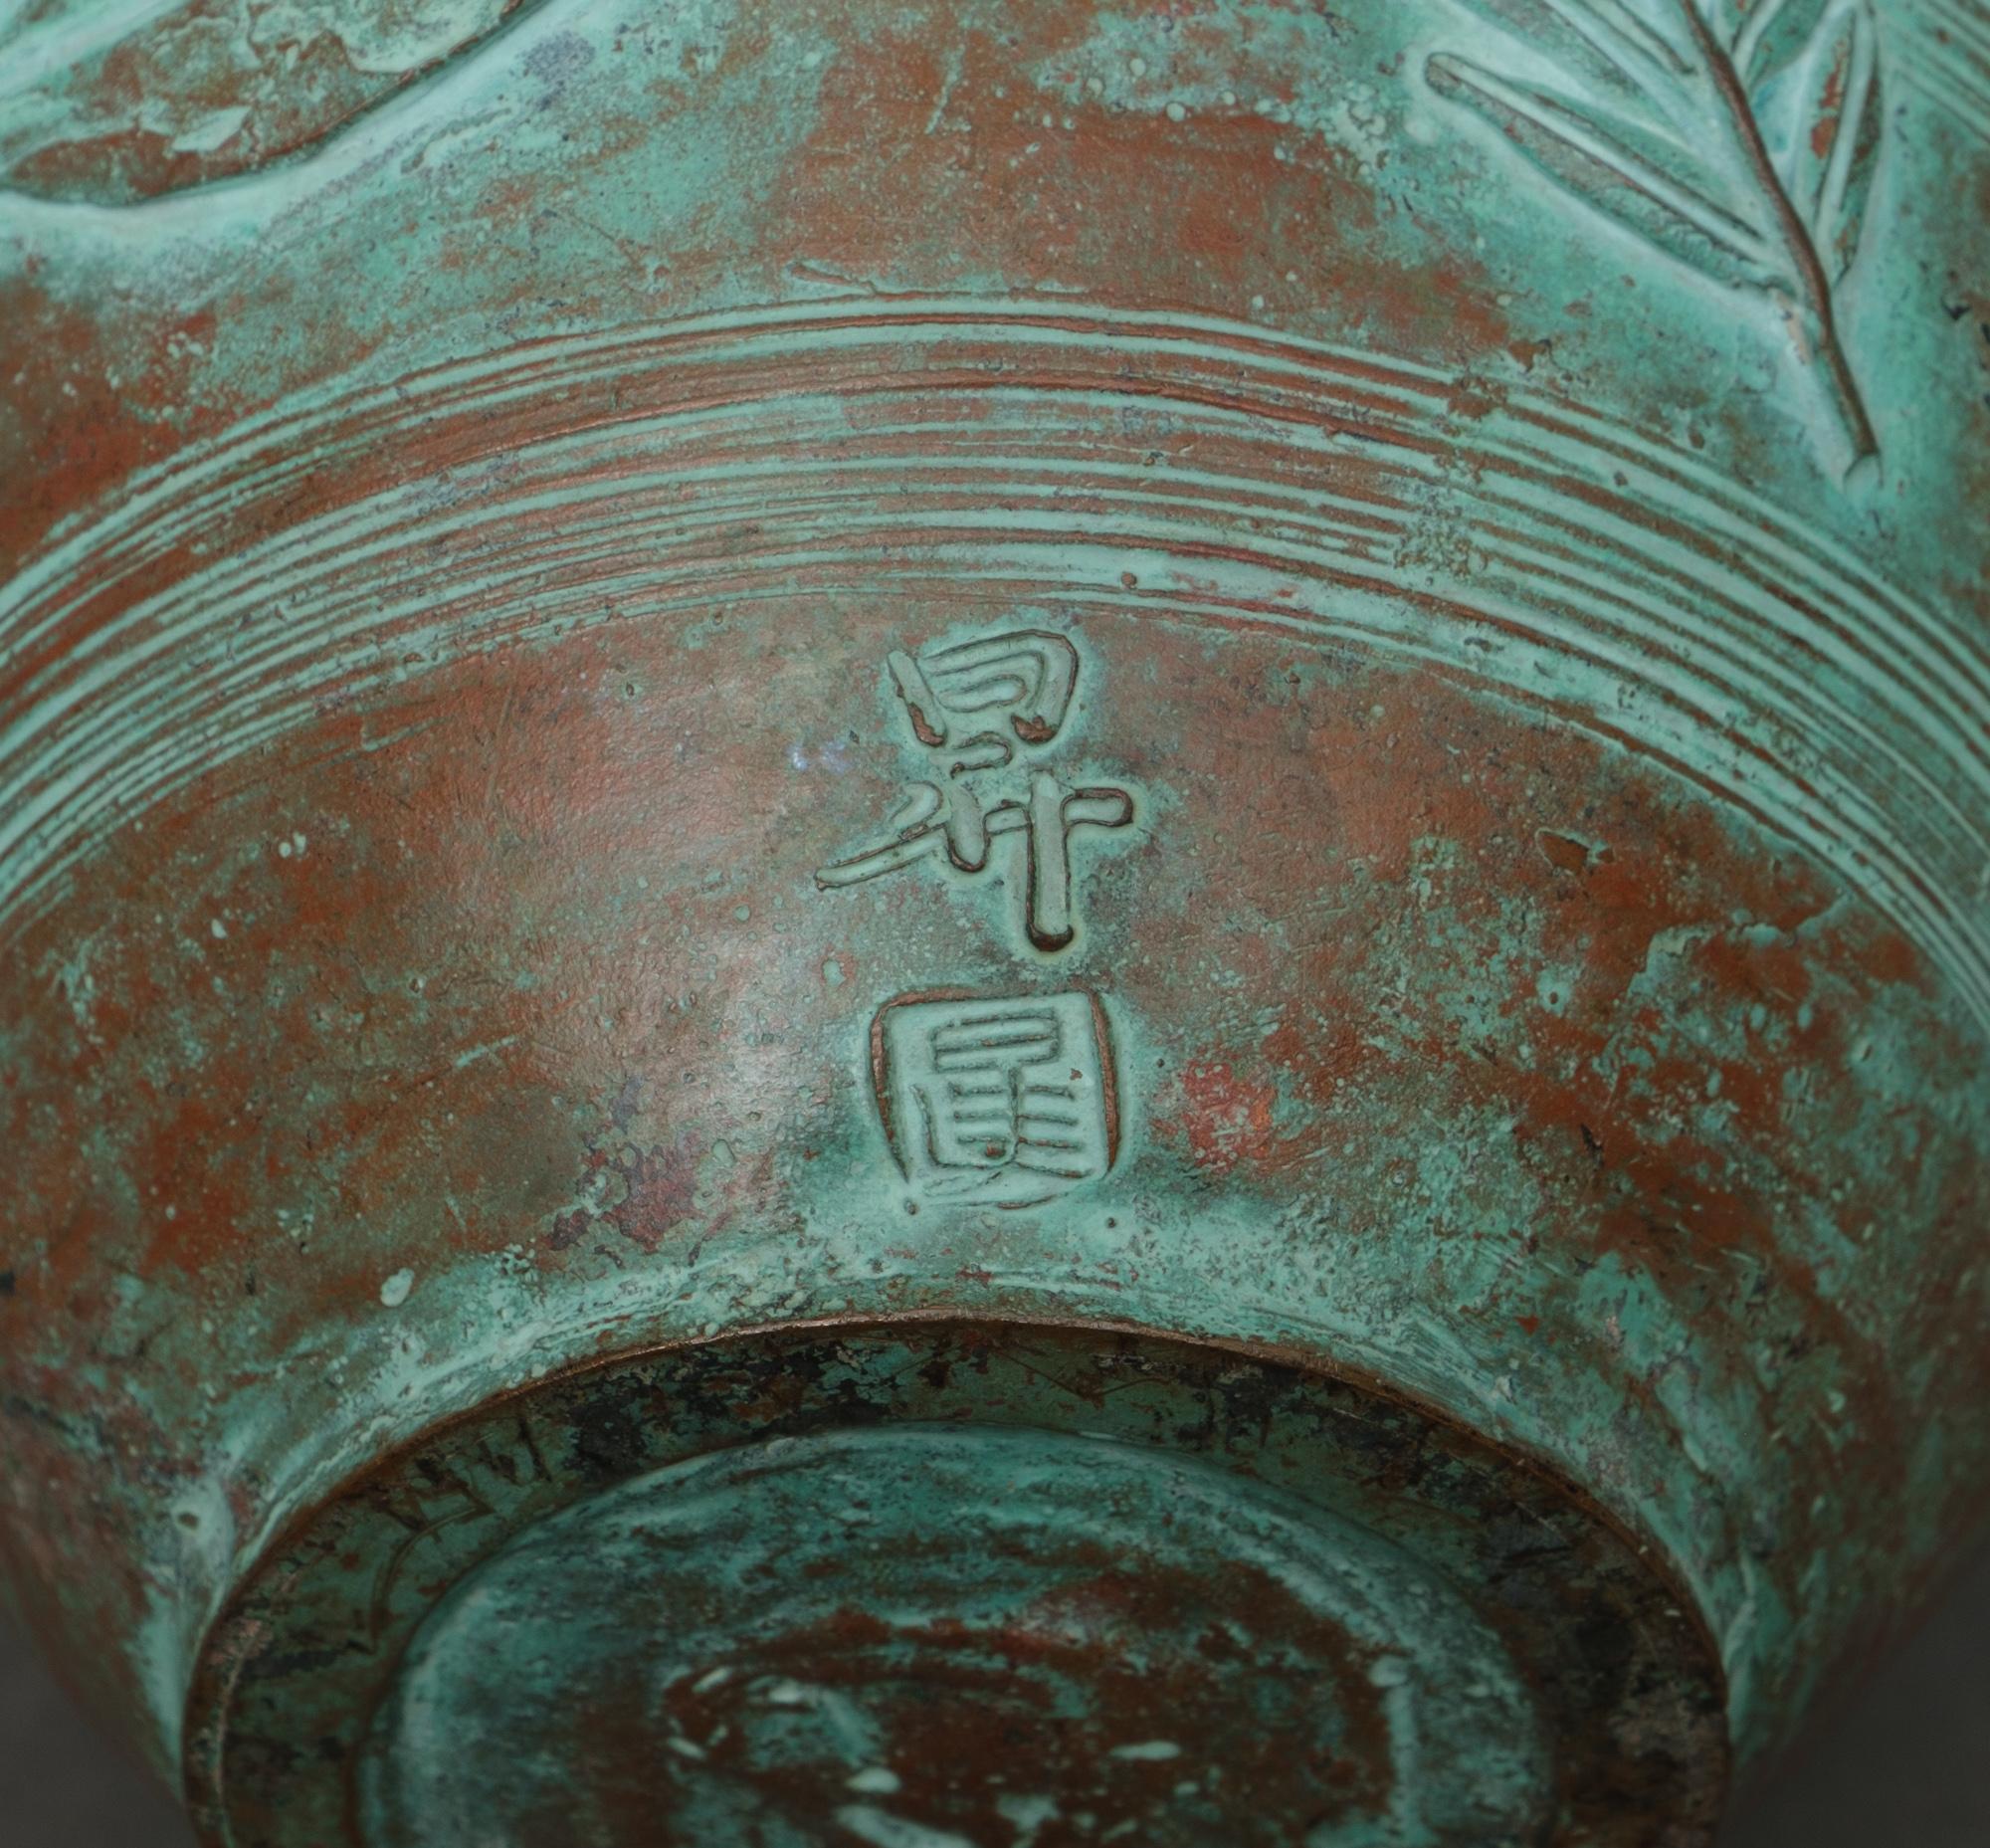 Bronze Ovoid Vase with High Relief Leaf Design by Nitten Artist Hirai Noboru 平井昇 For Sale 4